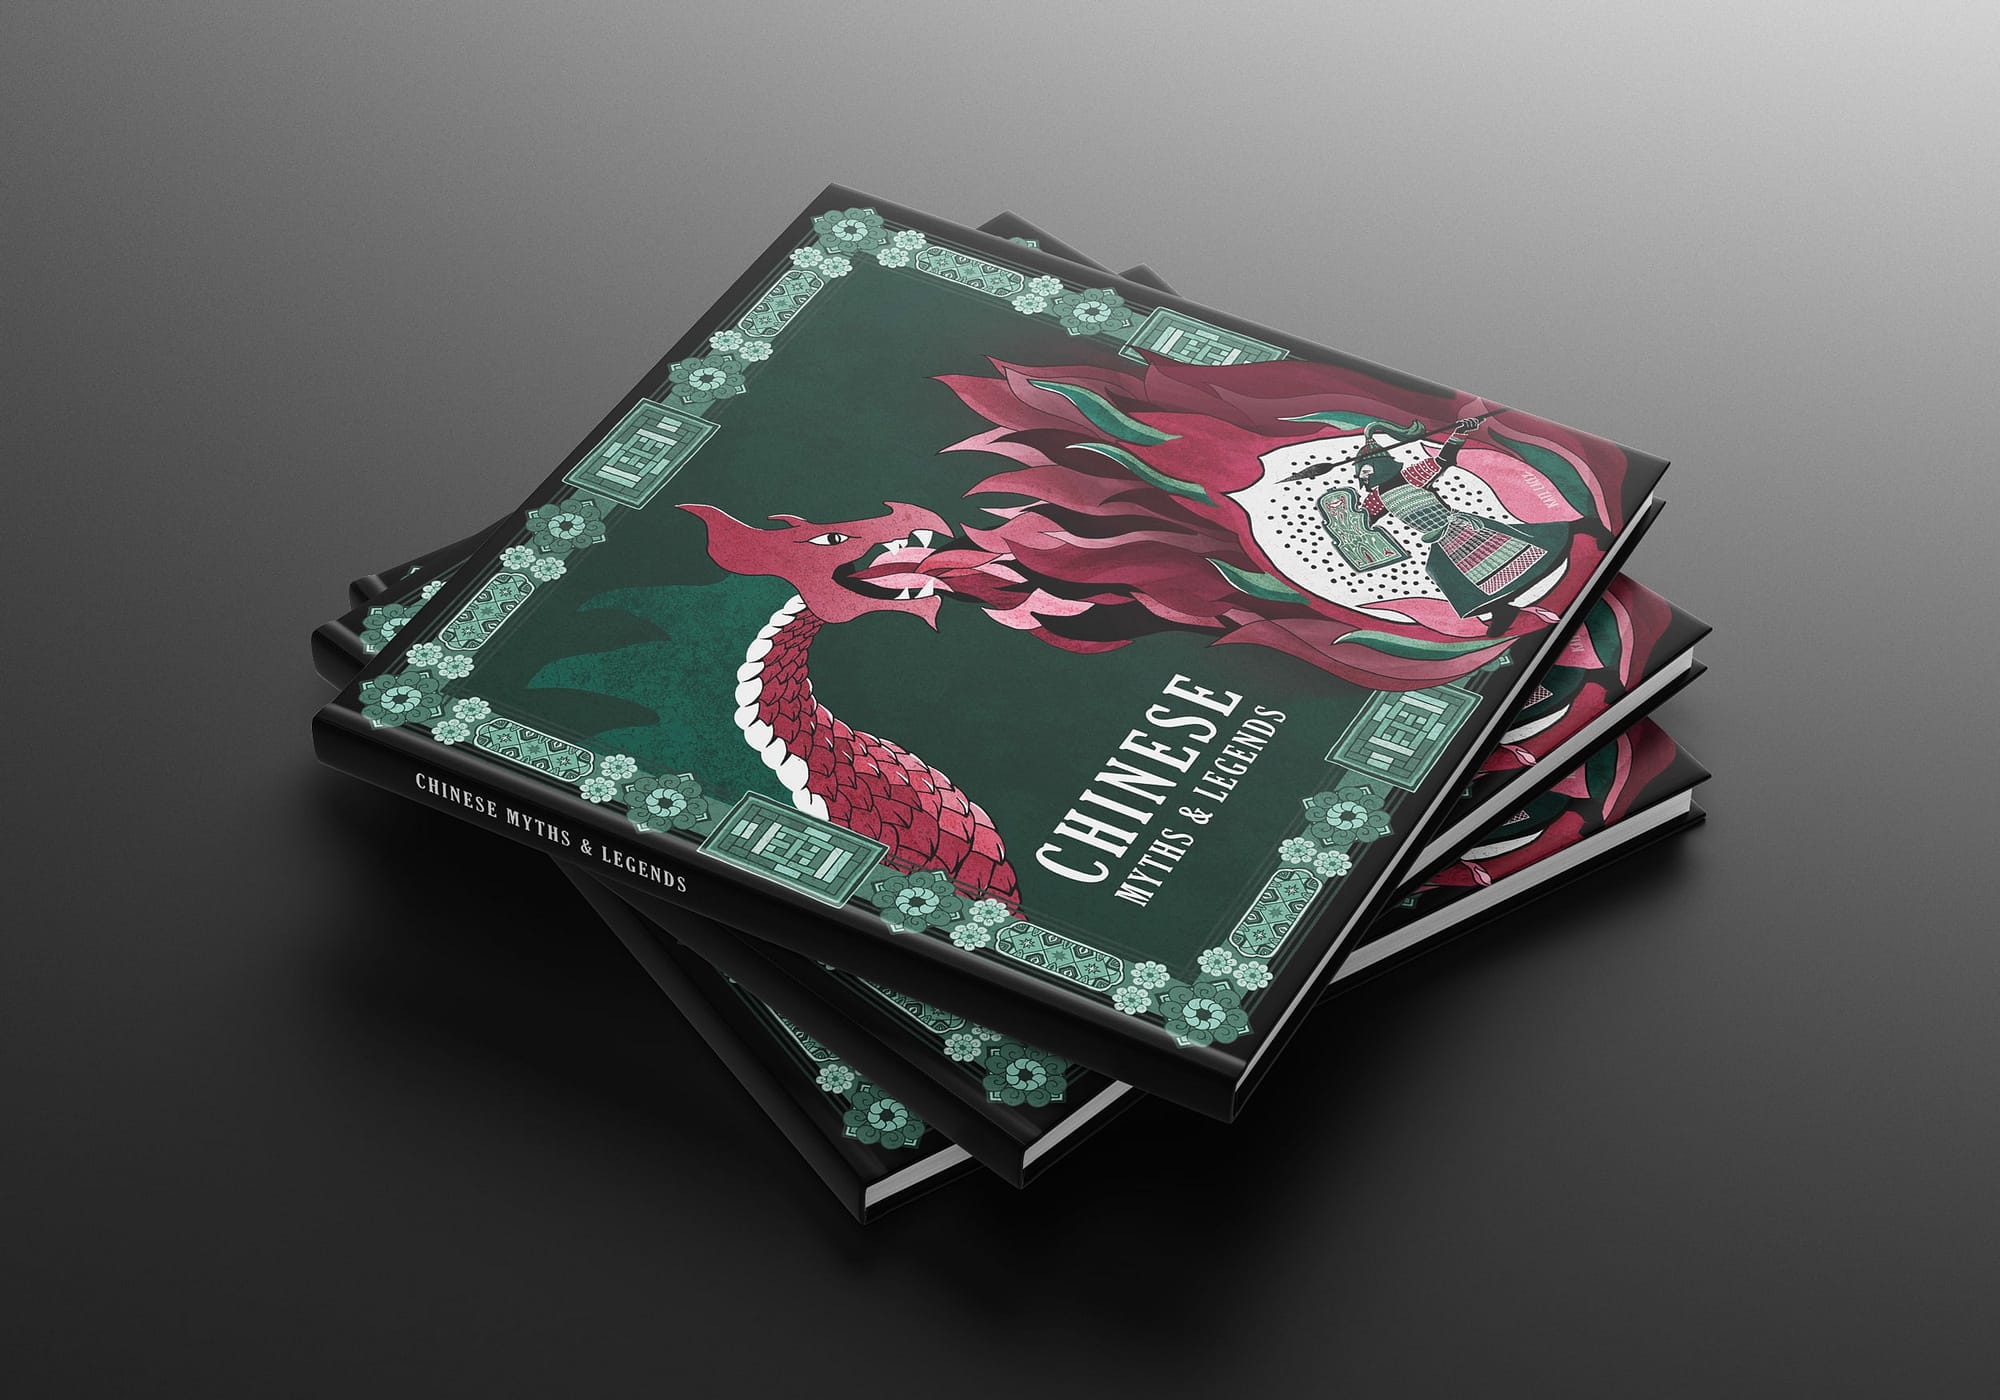 Chinese-myths-legends-book-cover-design-illustration